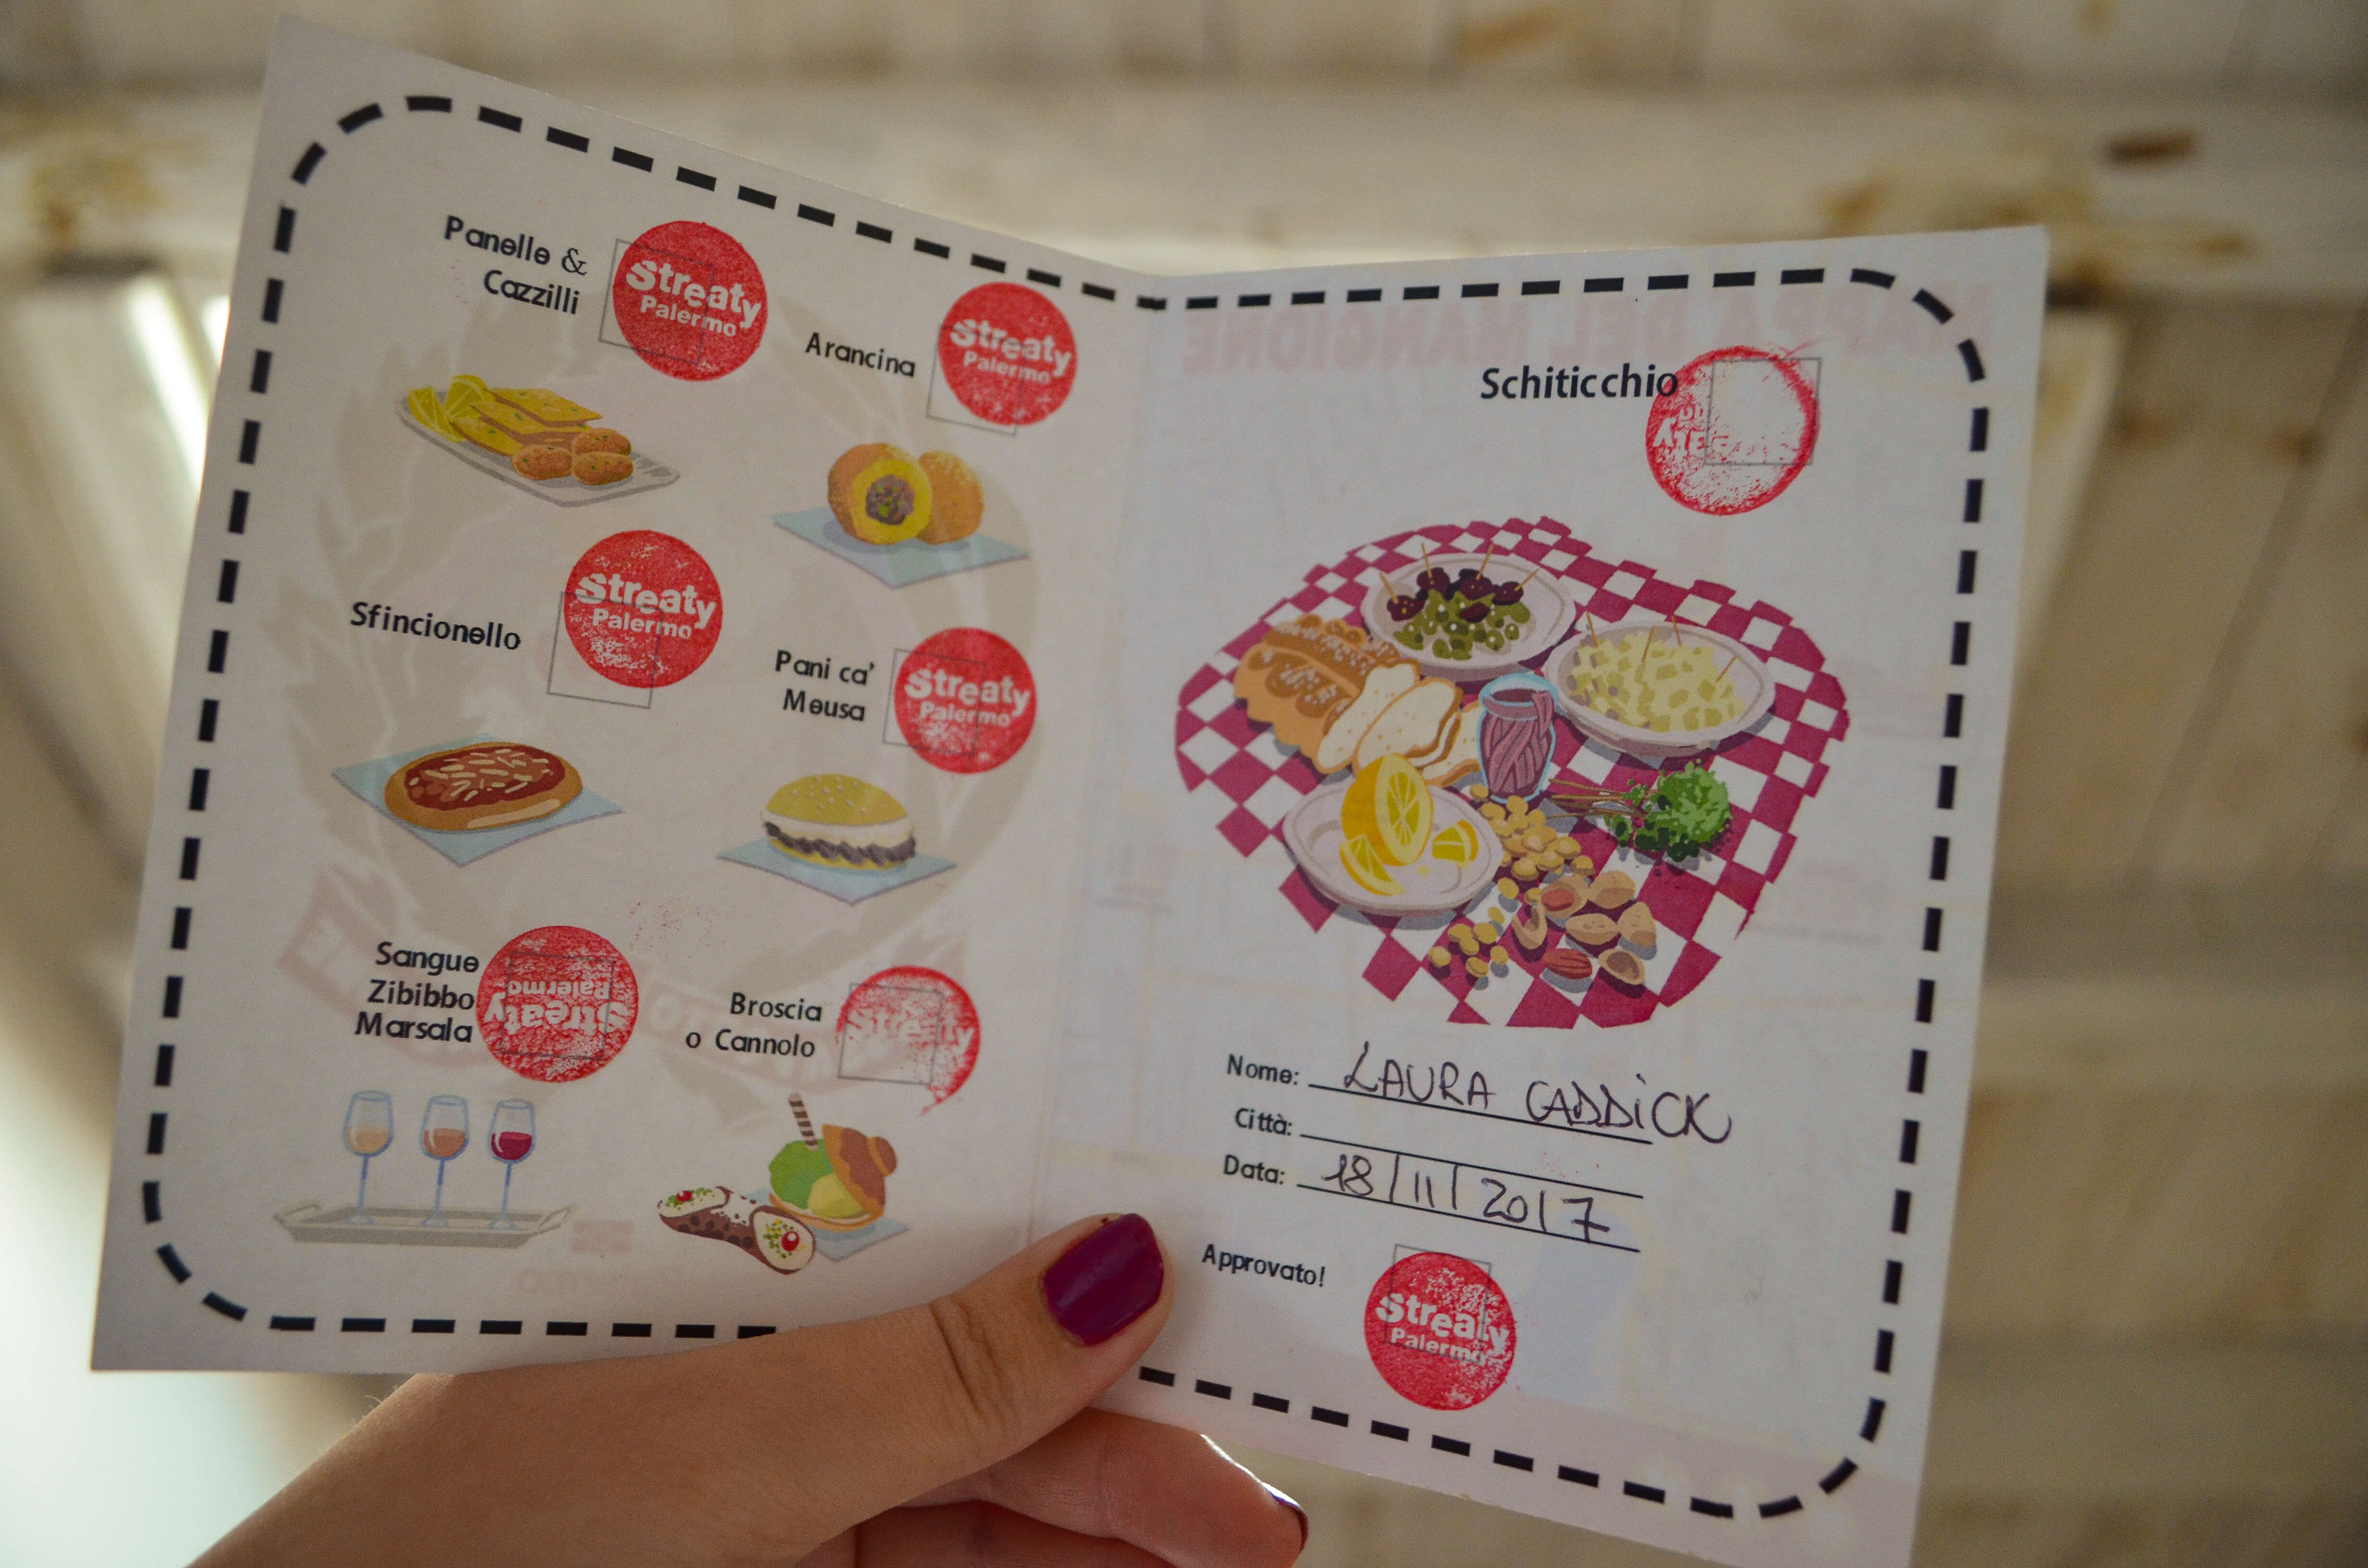 Palermo street food tour with Streaty - Streaty food passport